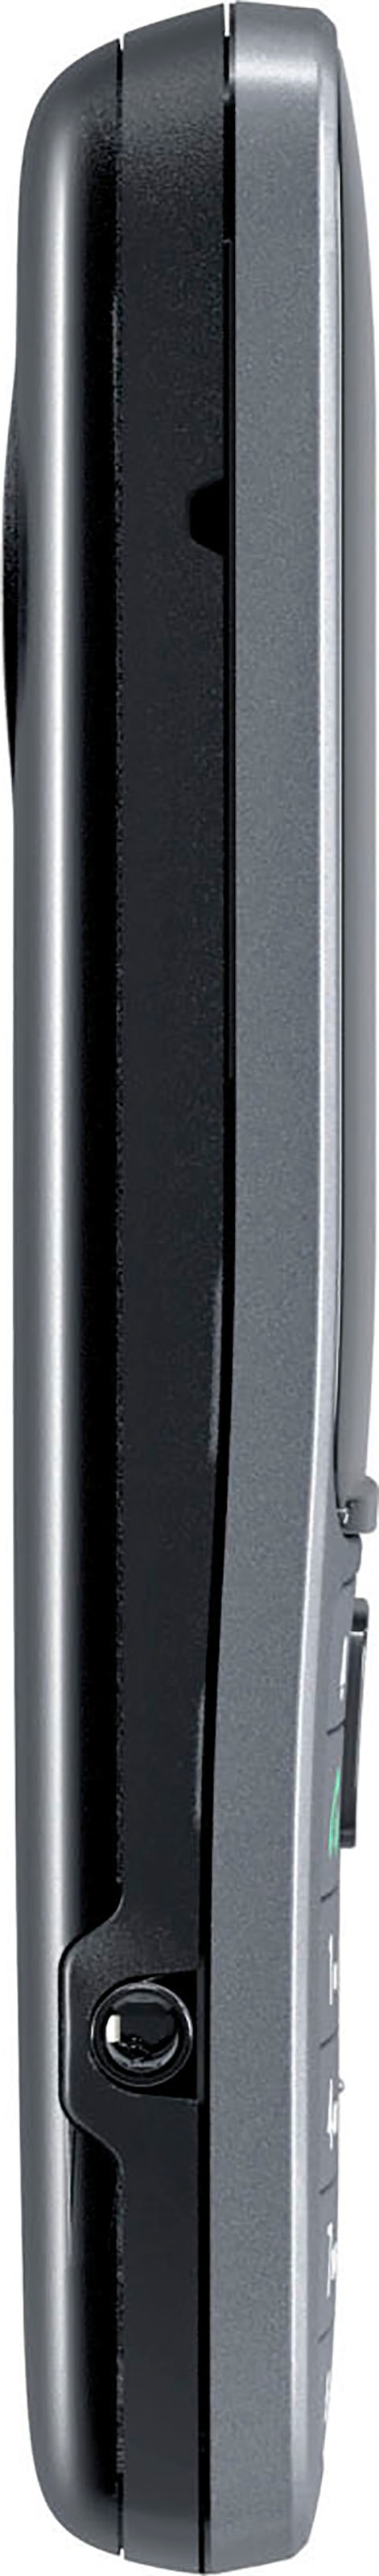 Telekom Festnetztelefon »DECT elmeg D142«, | BAUR (Bluetooth) Handset